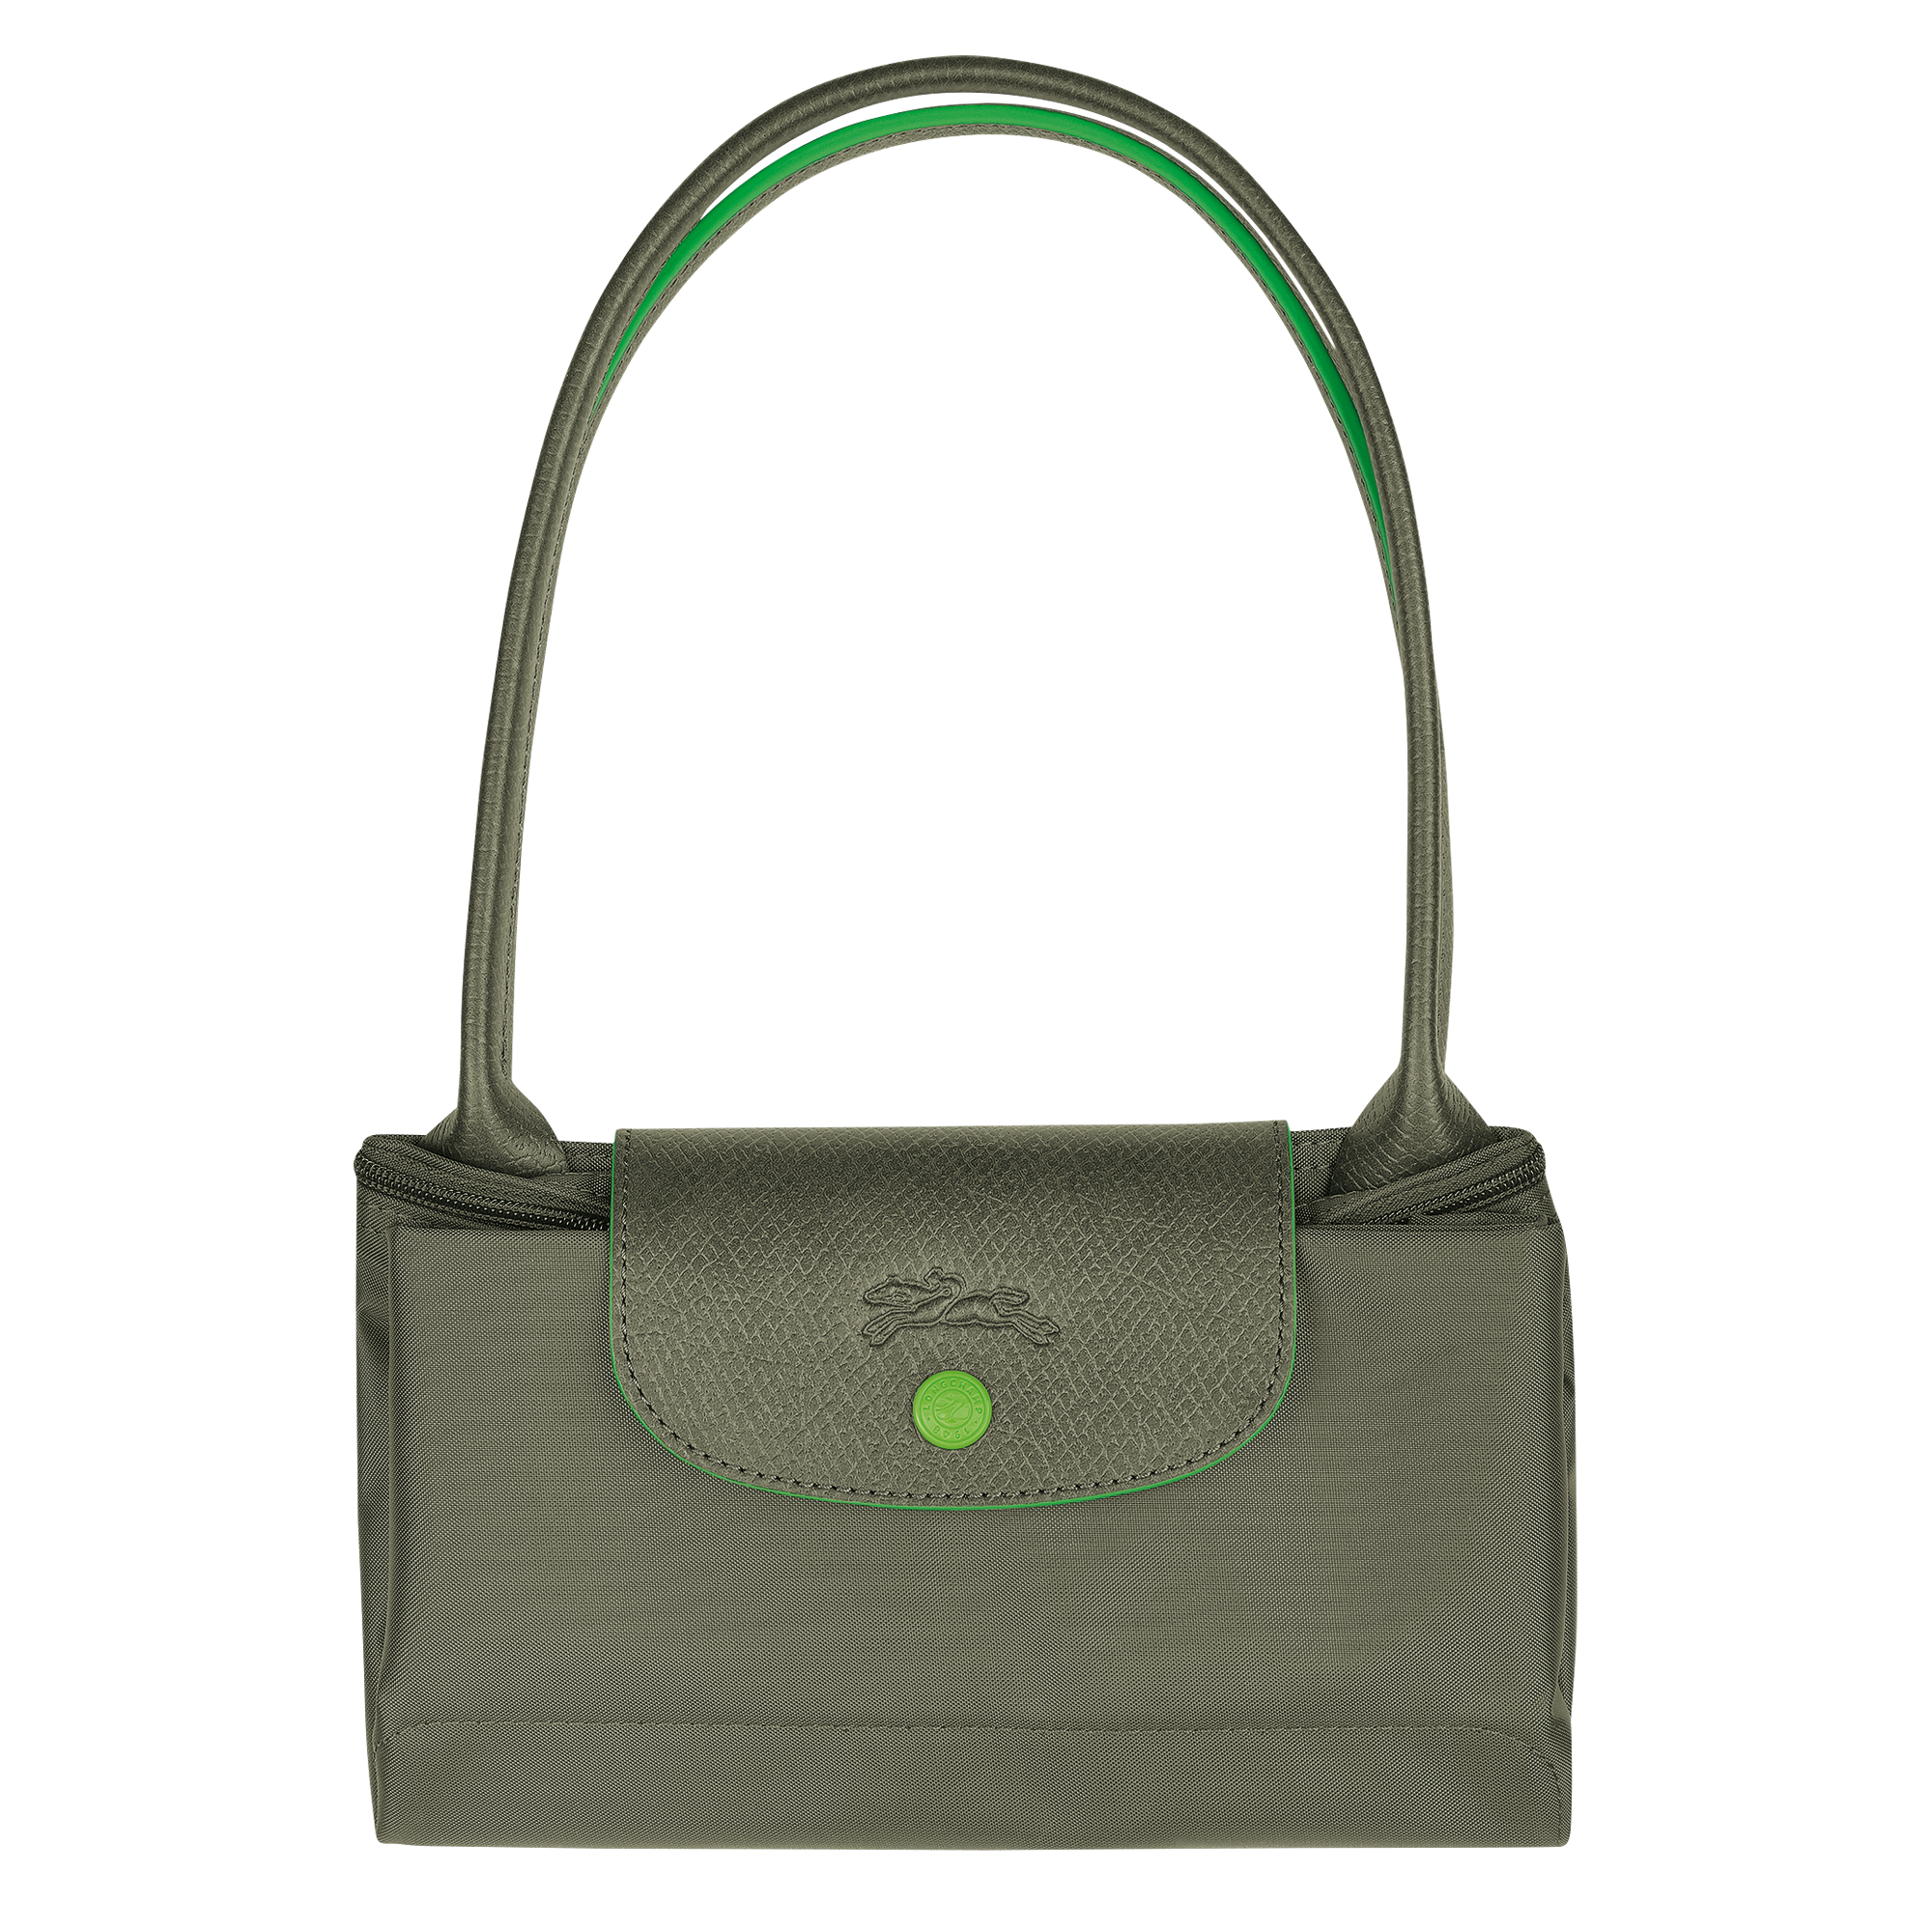 longchamp green bag